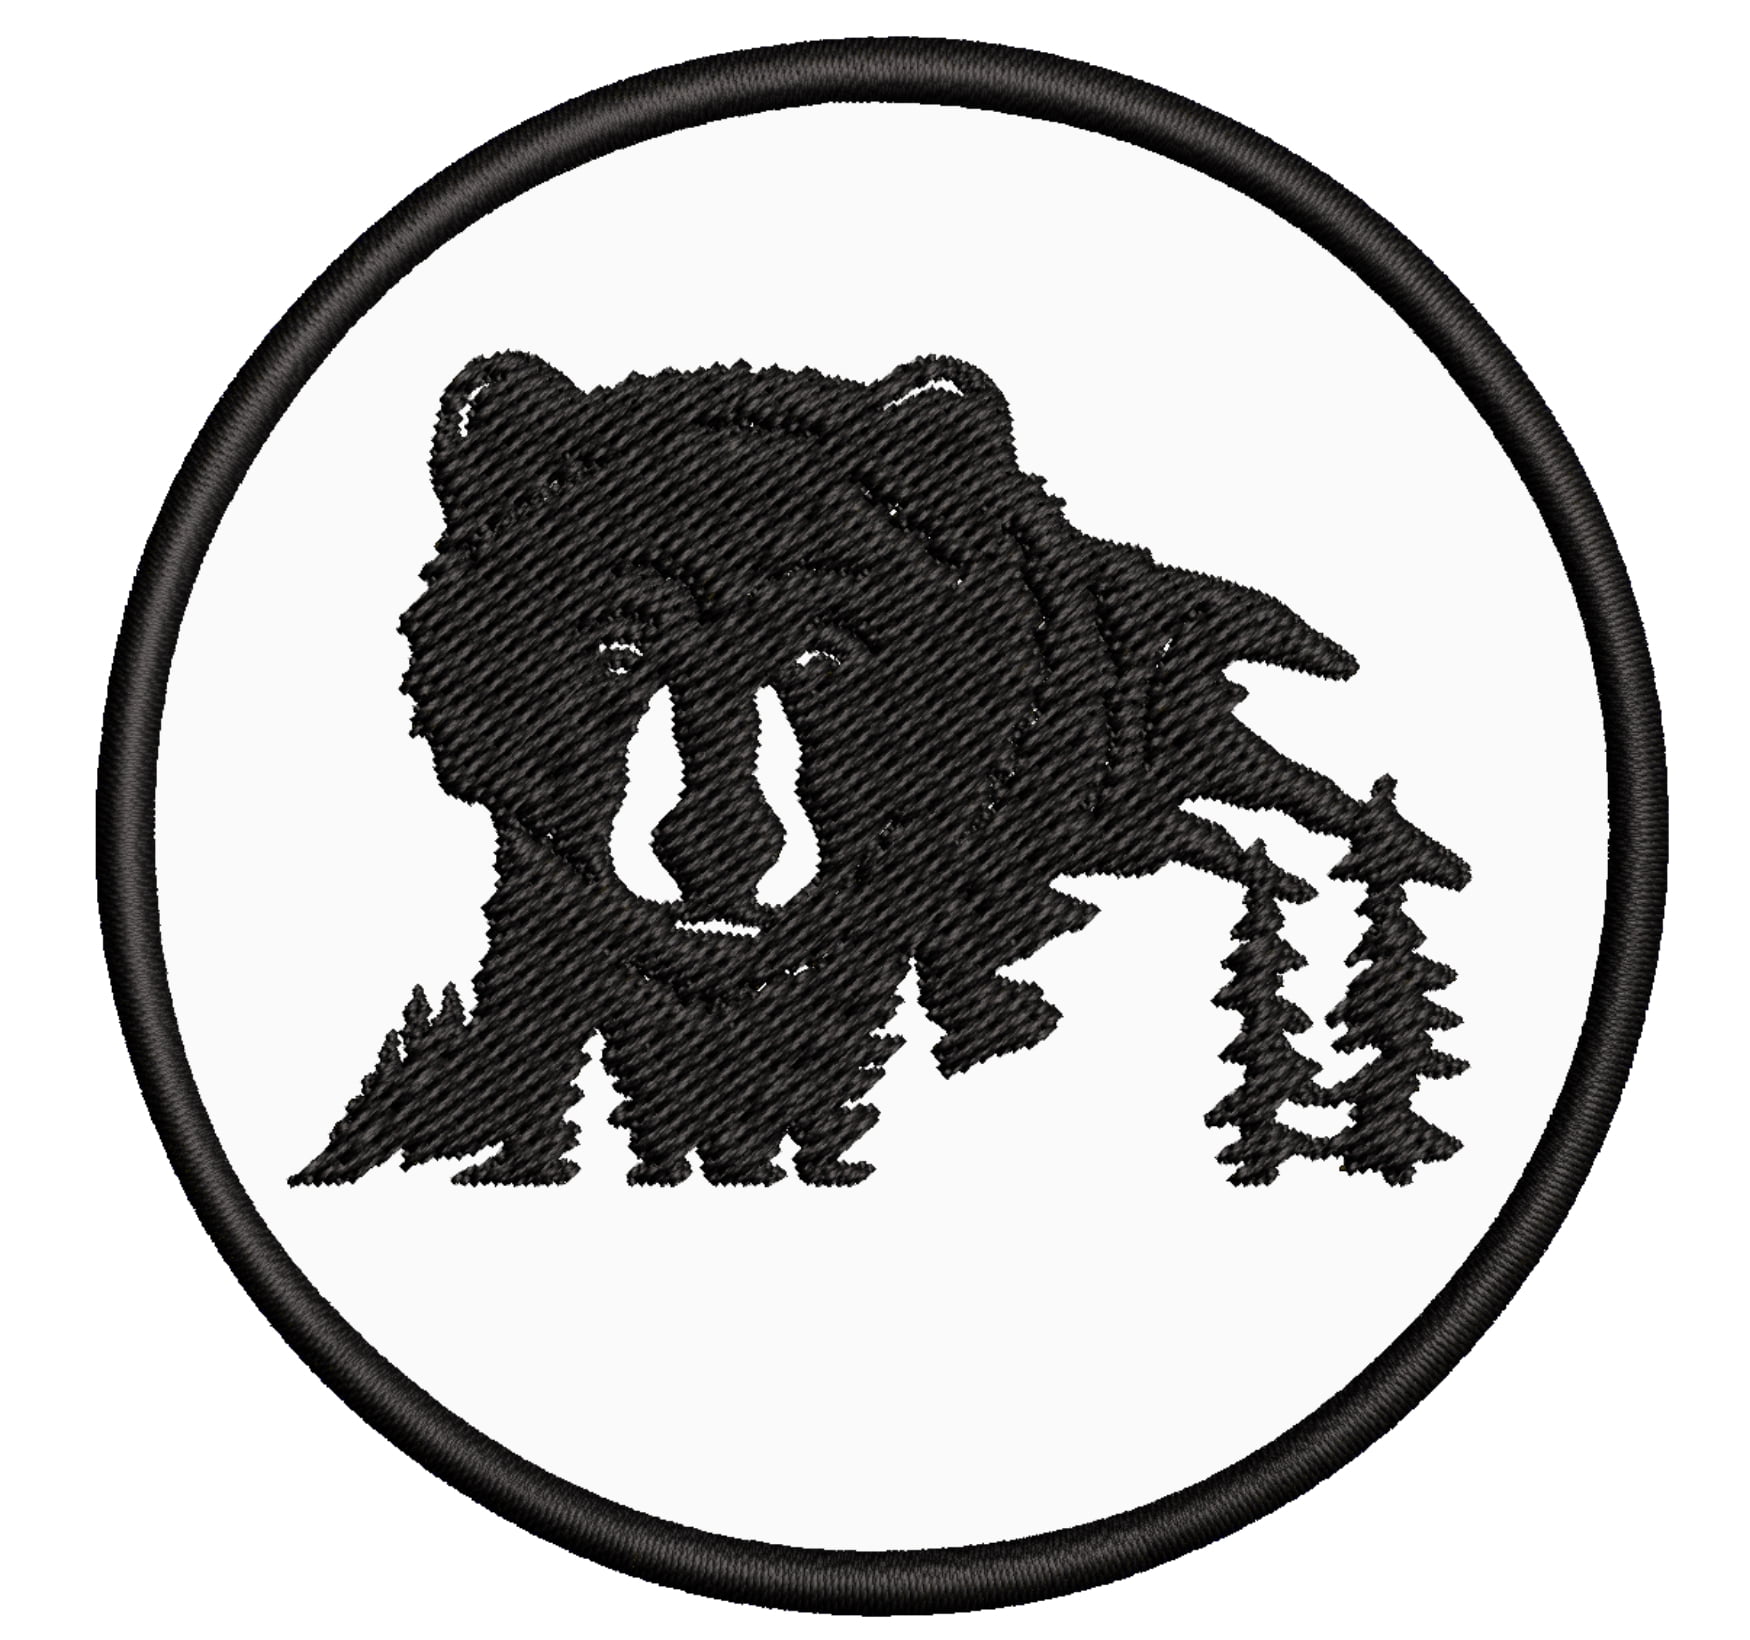 Bear Thread Applique Pressing Sheet for sale online